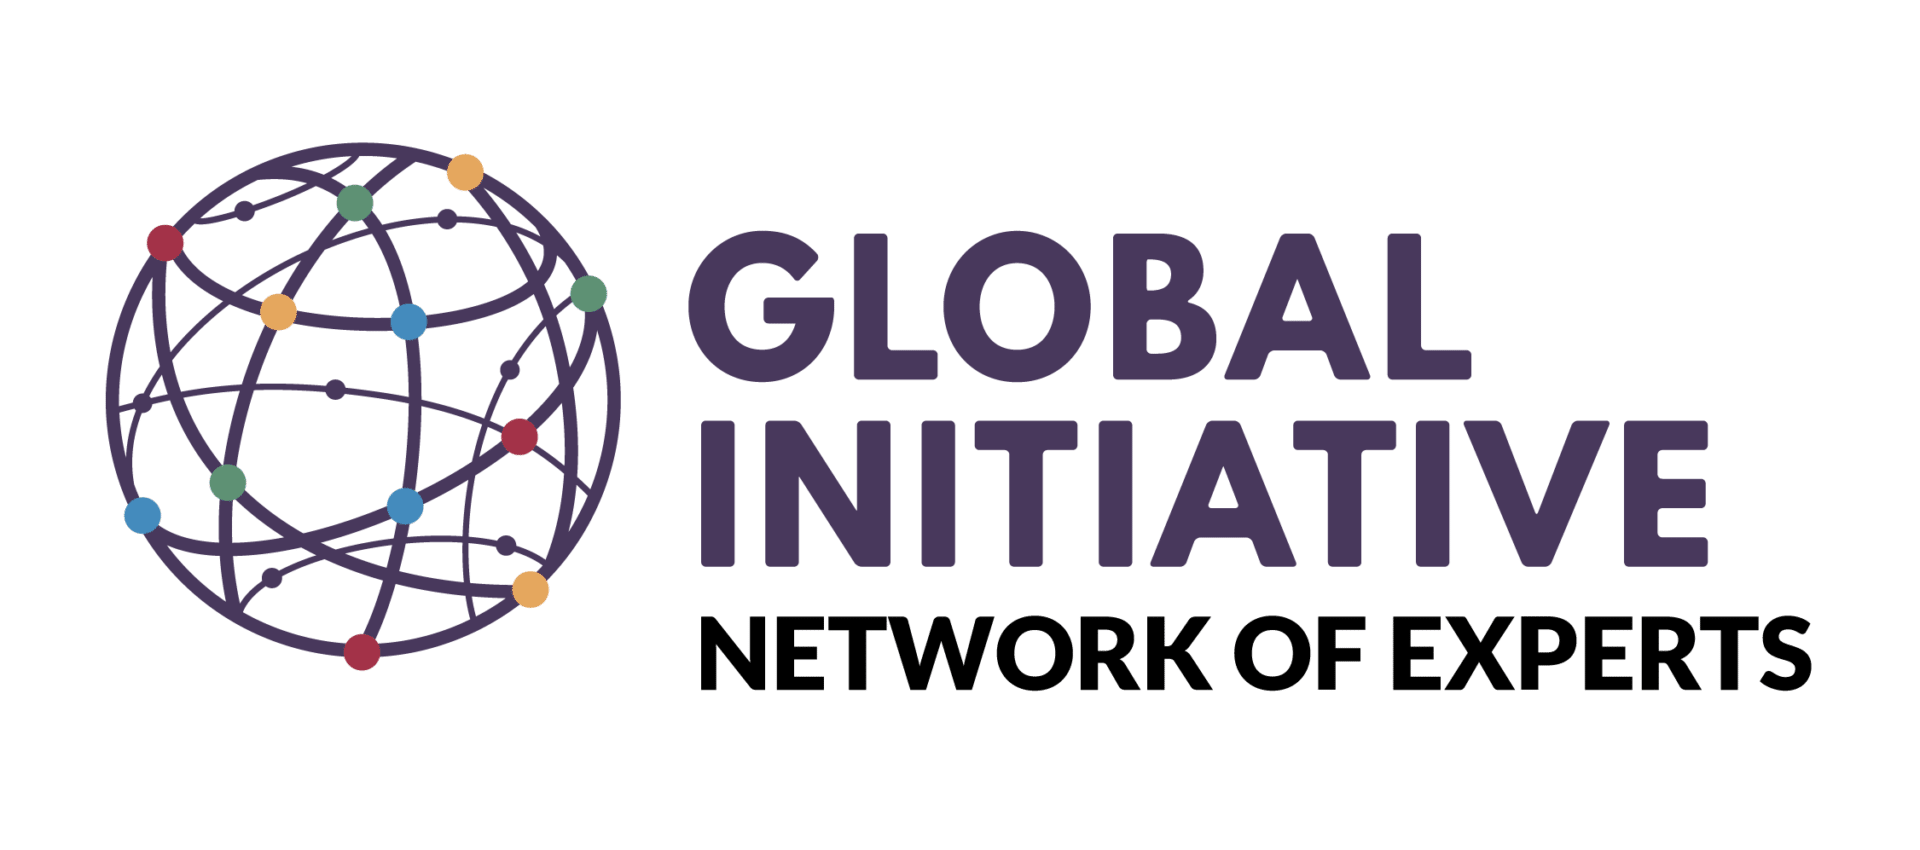 Global Initiative Against Transnational Organized Crime